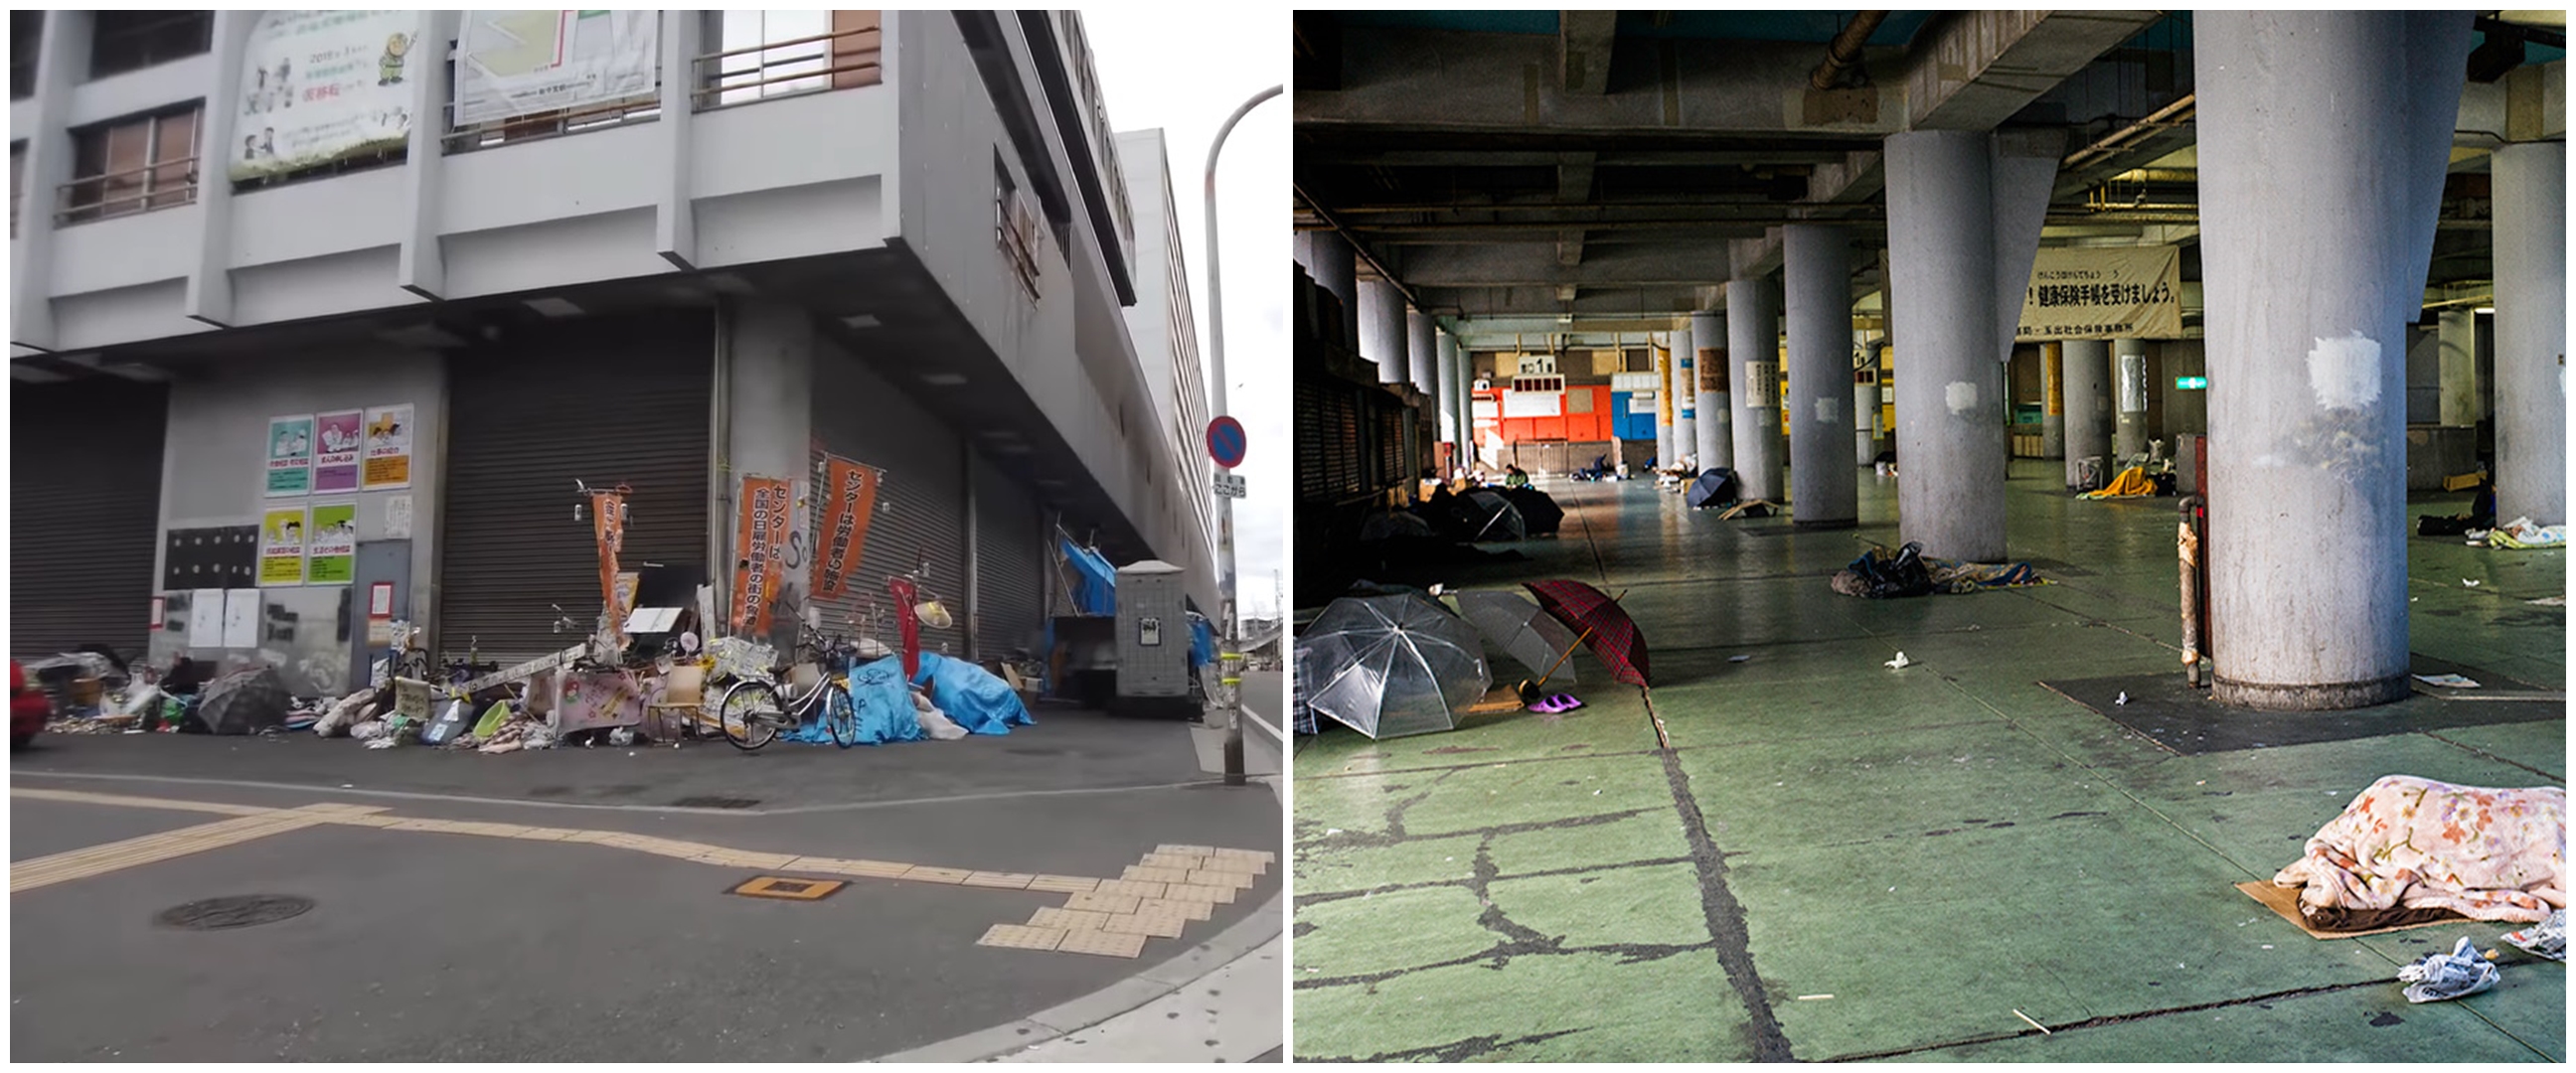 Terkenal bersih, ini 11 potret kota kumuh Kamagasaki di Jepang